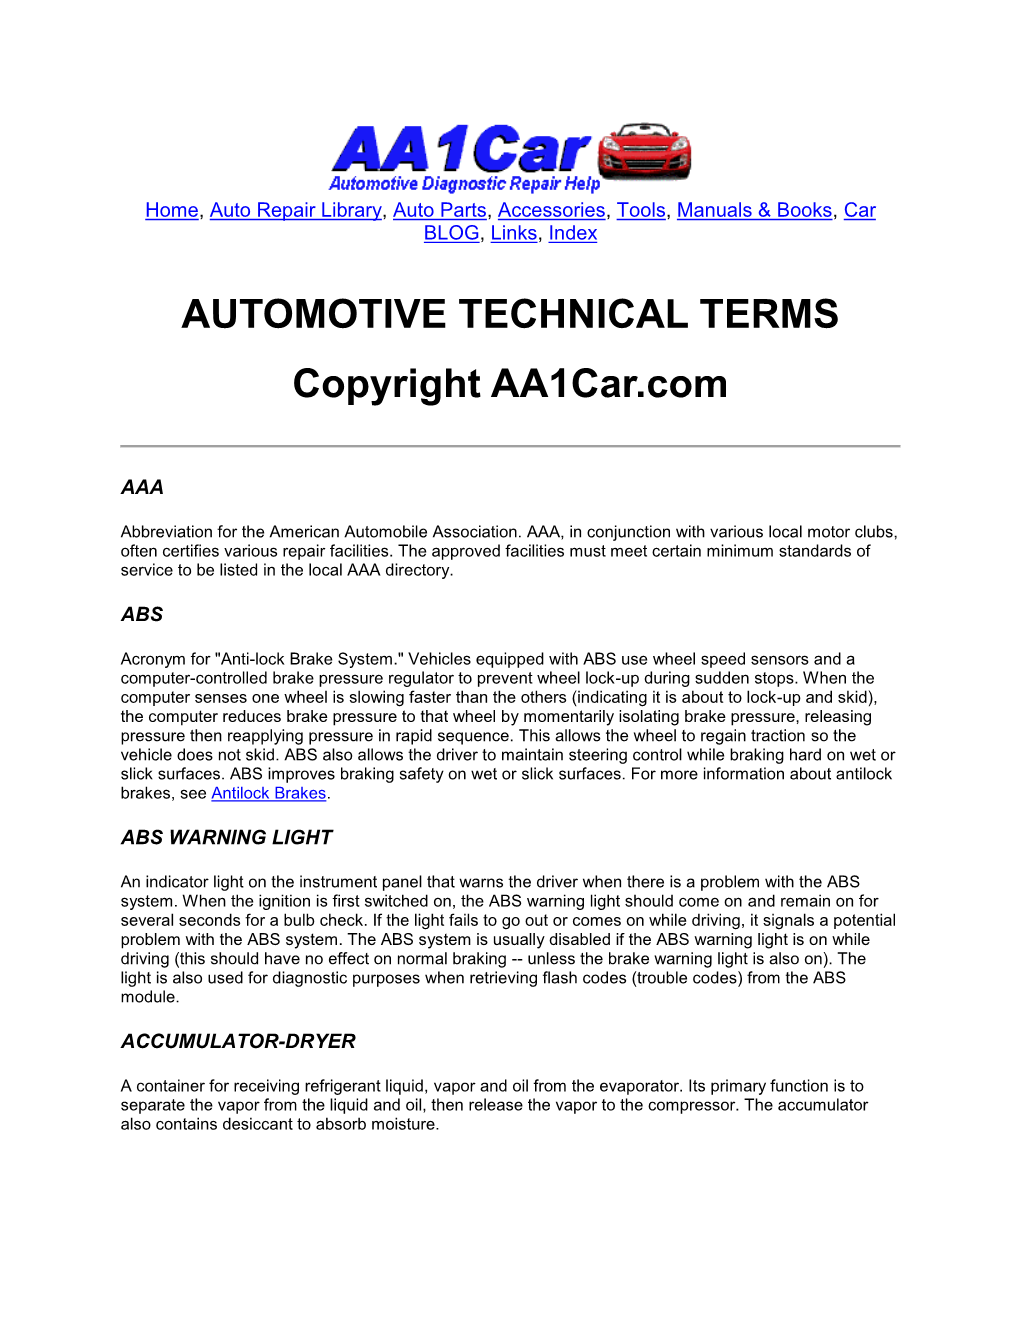 AUTOMOTIVE TECHNICAL TERMS Copyright Aa1car.Com